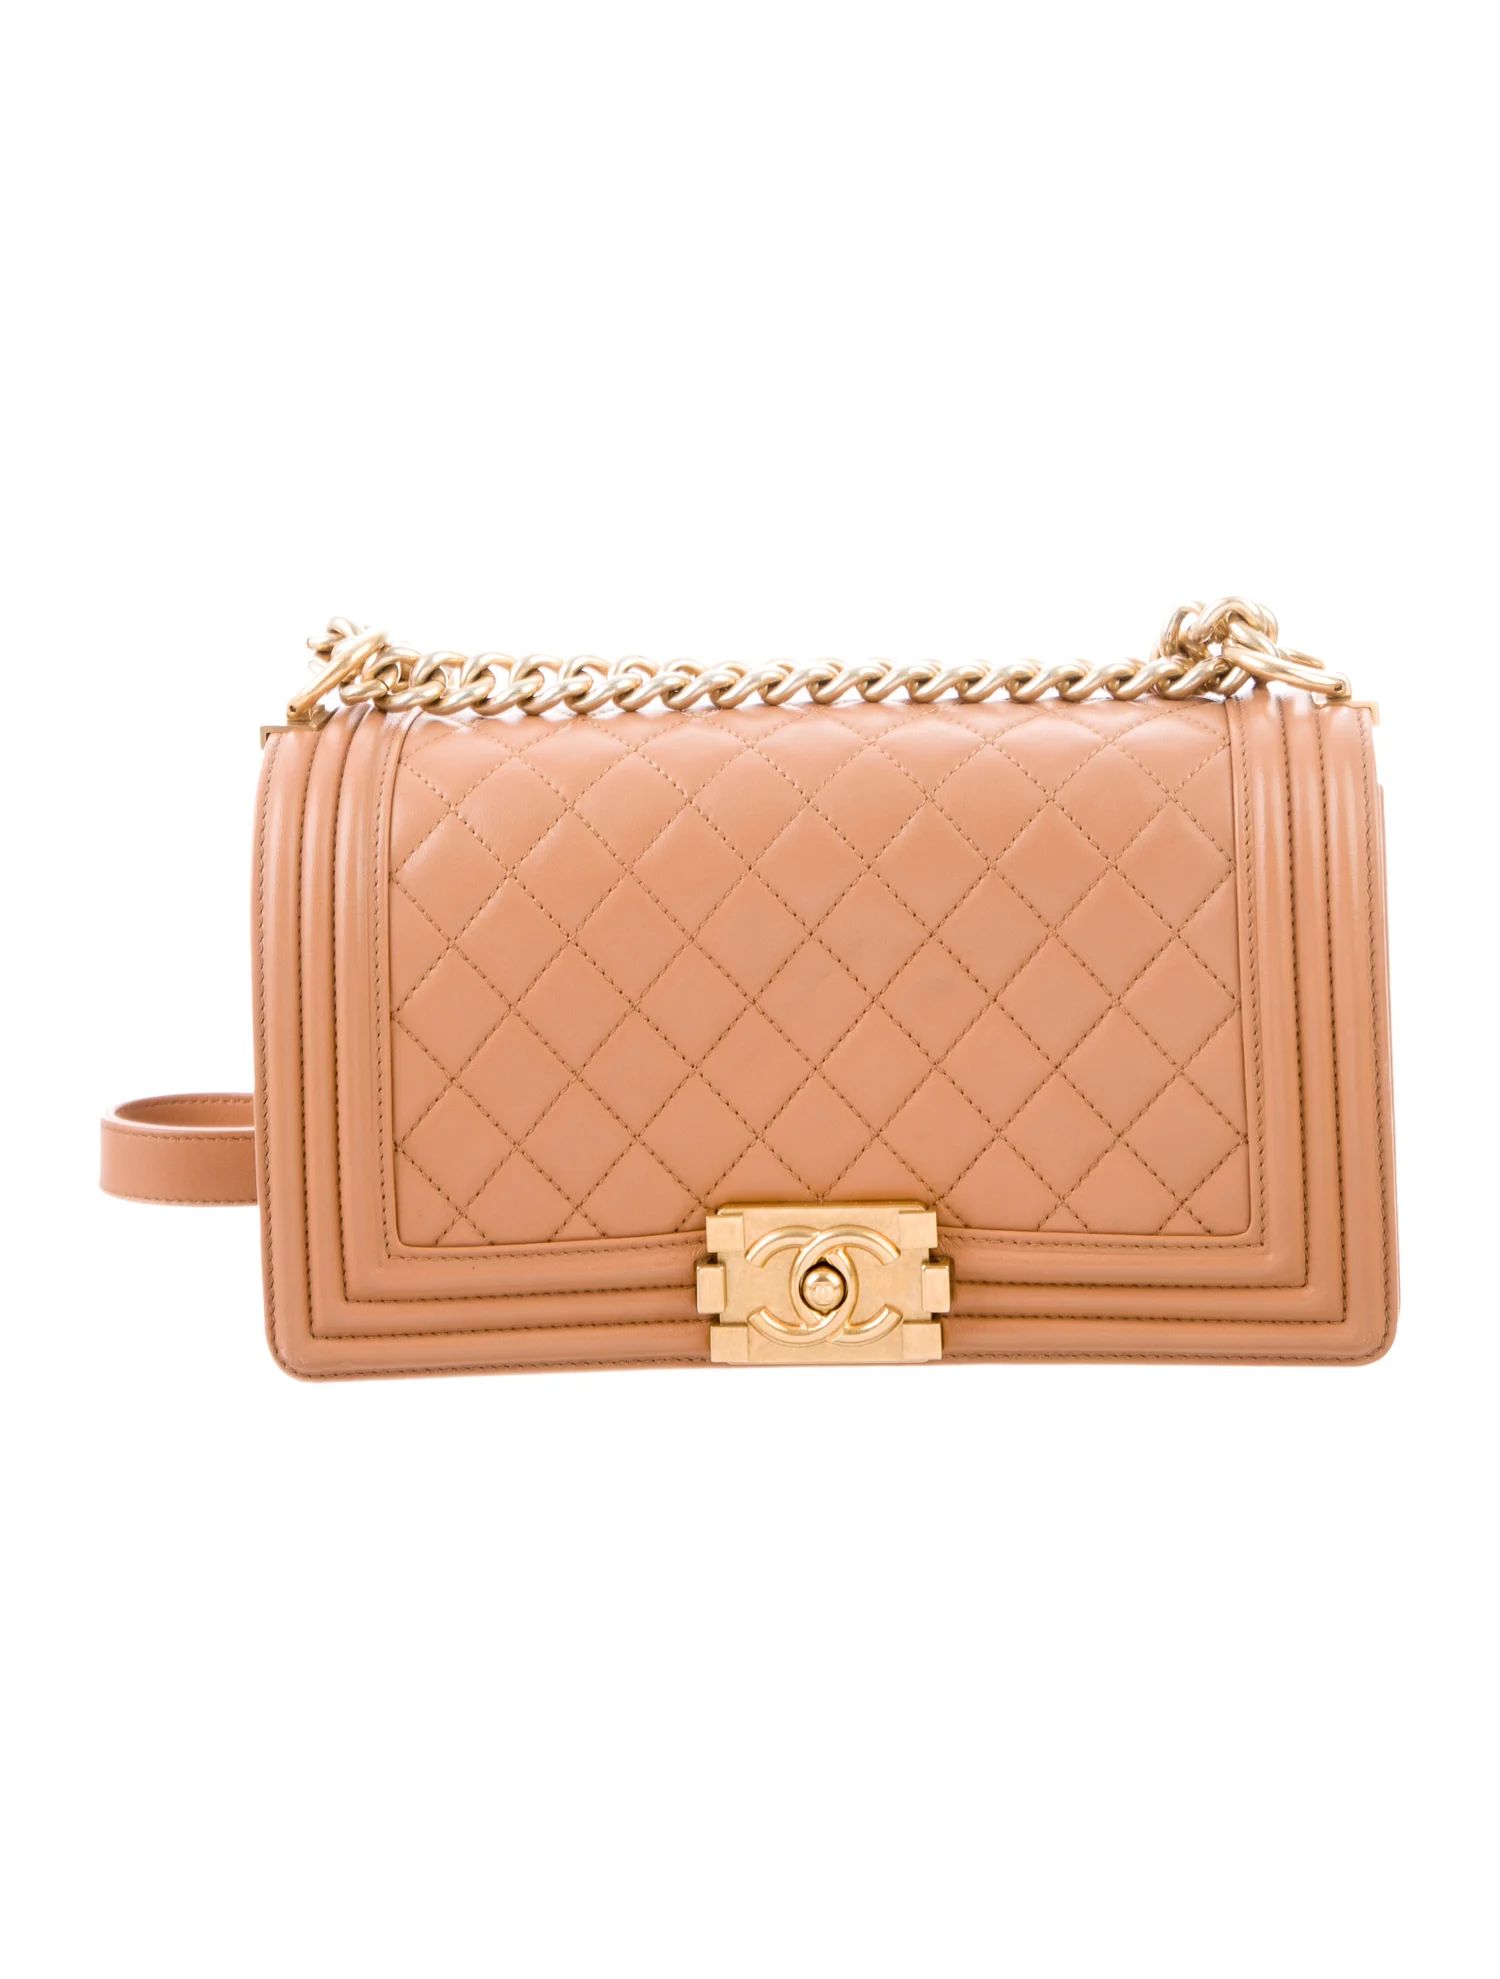 Chanel Quilted Medium Boy Bag - Handbags -
          CHA368344 | The RealReal | The RealReal